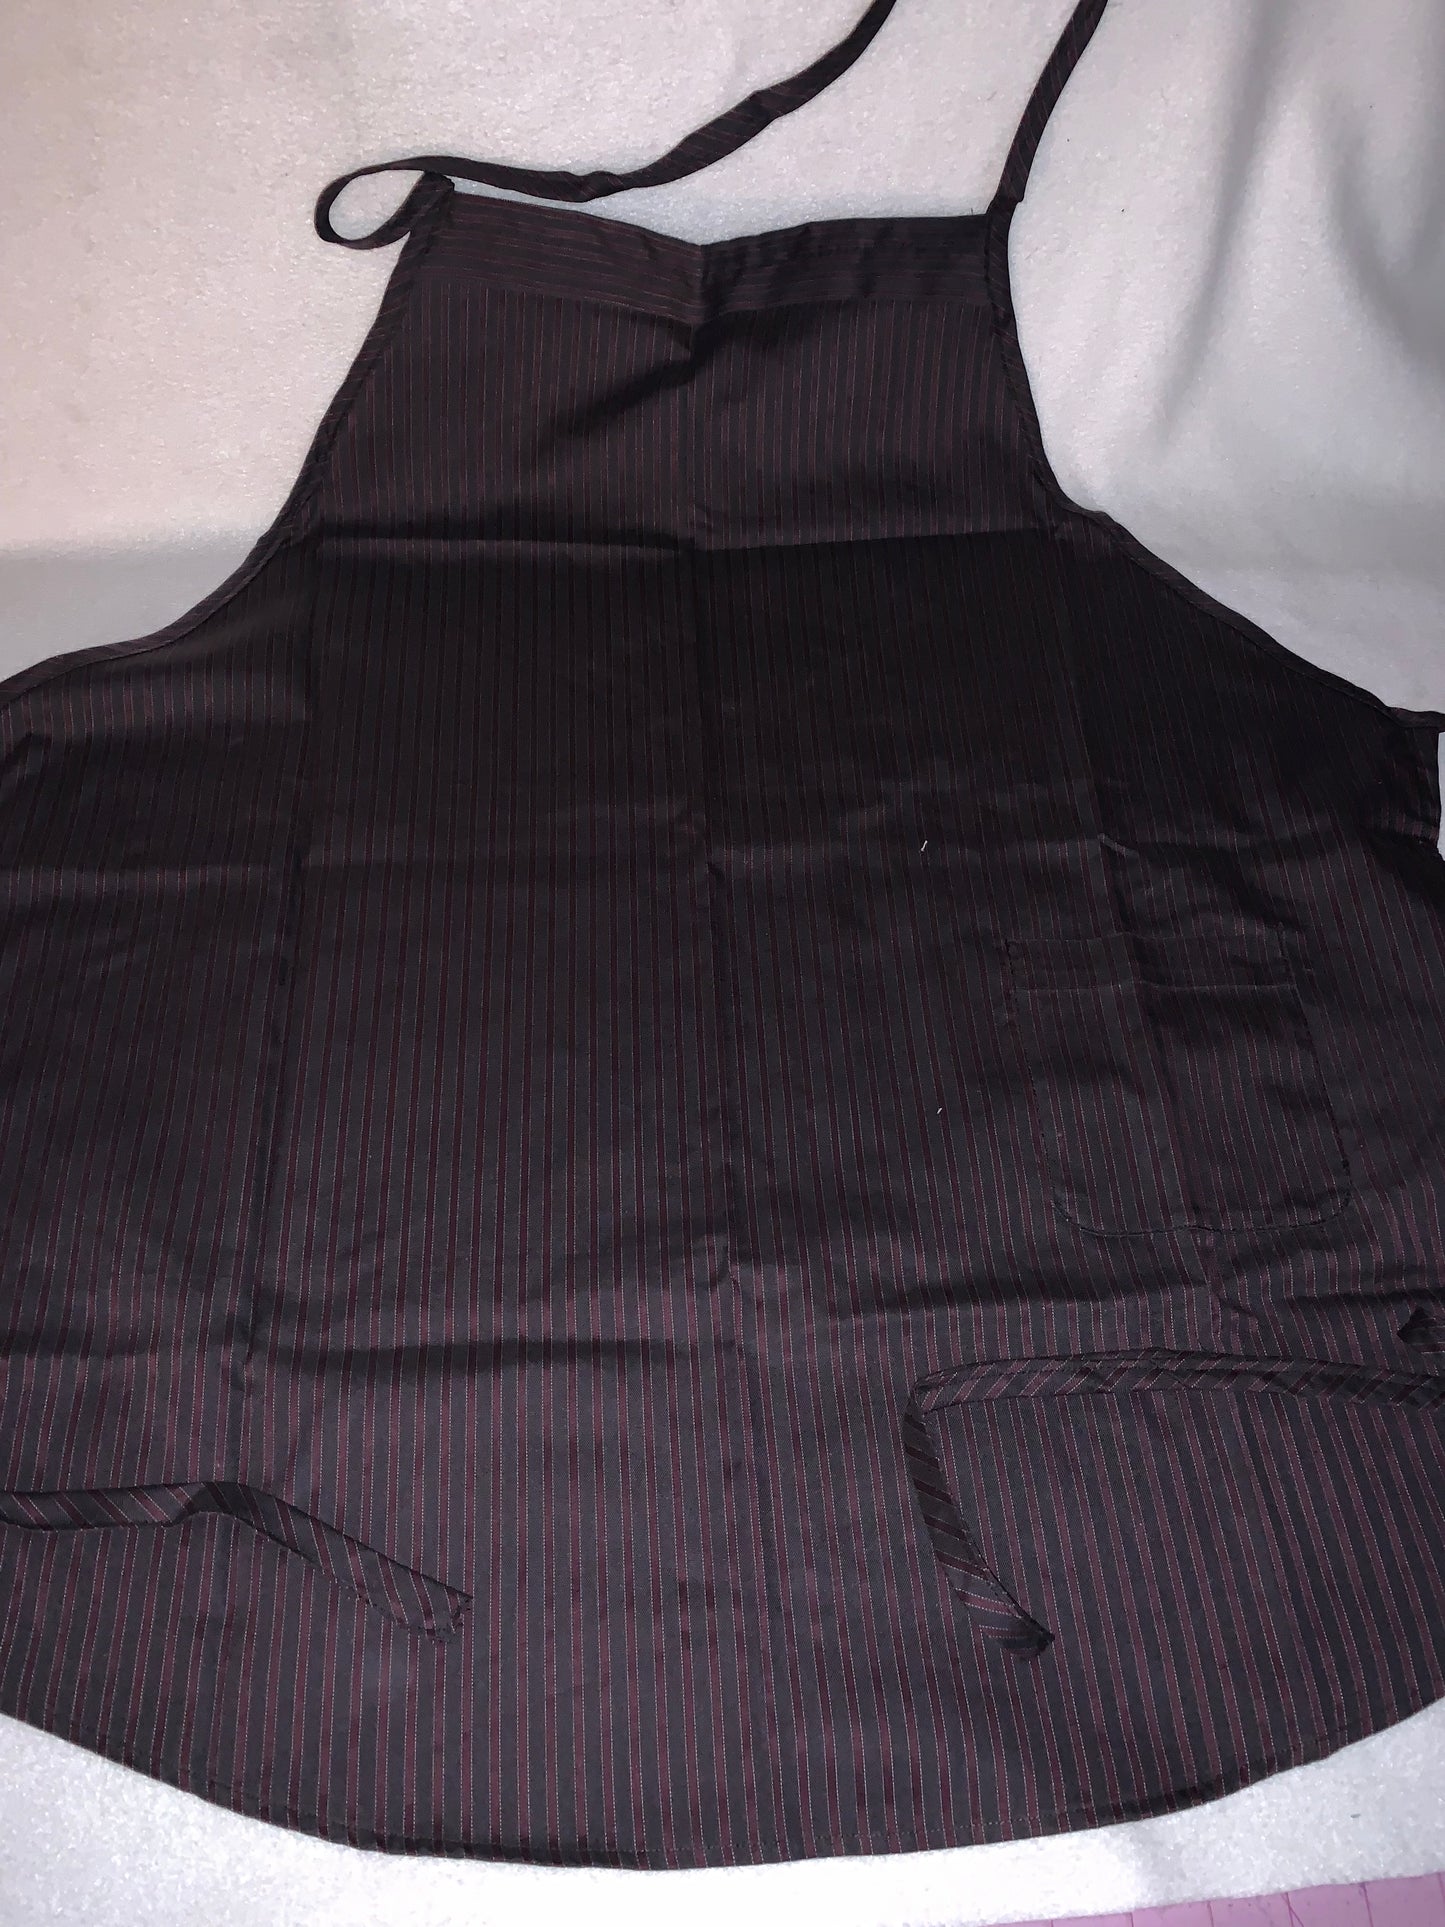 Adult Apron with pockets, kitchen apron, adult or large child, washable, craft apron, male shirt apron